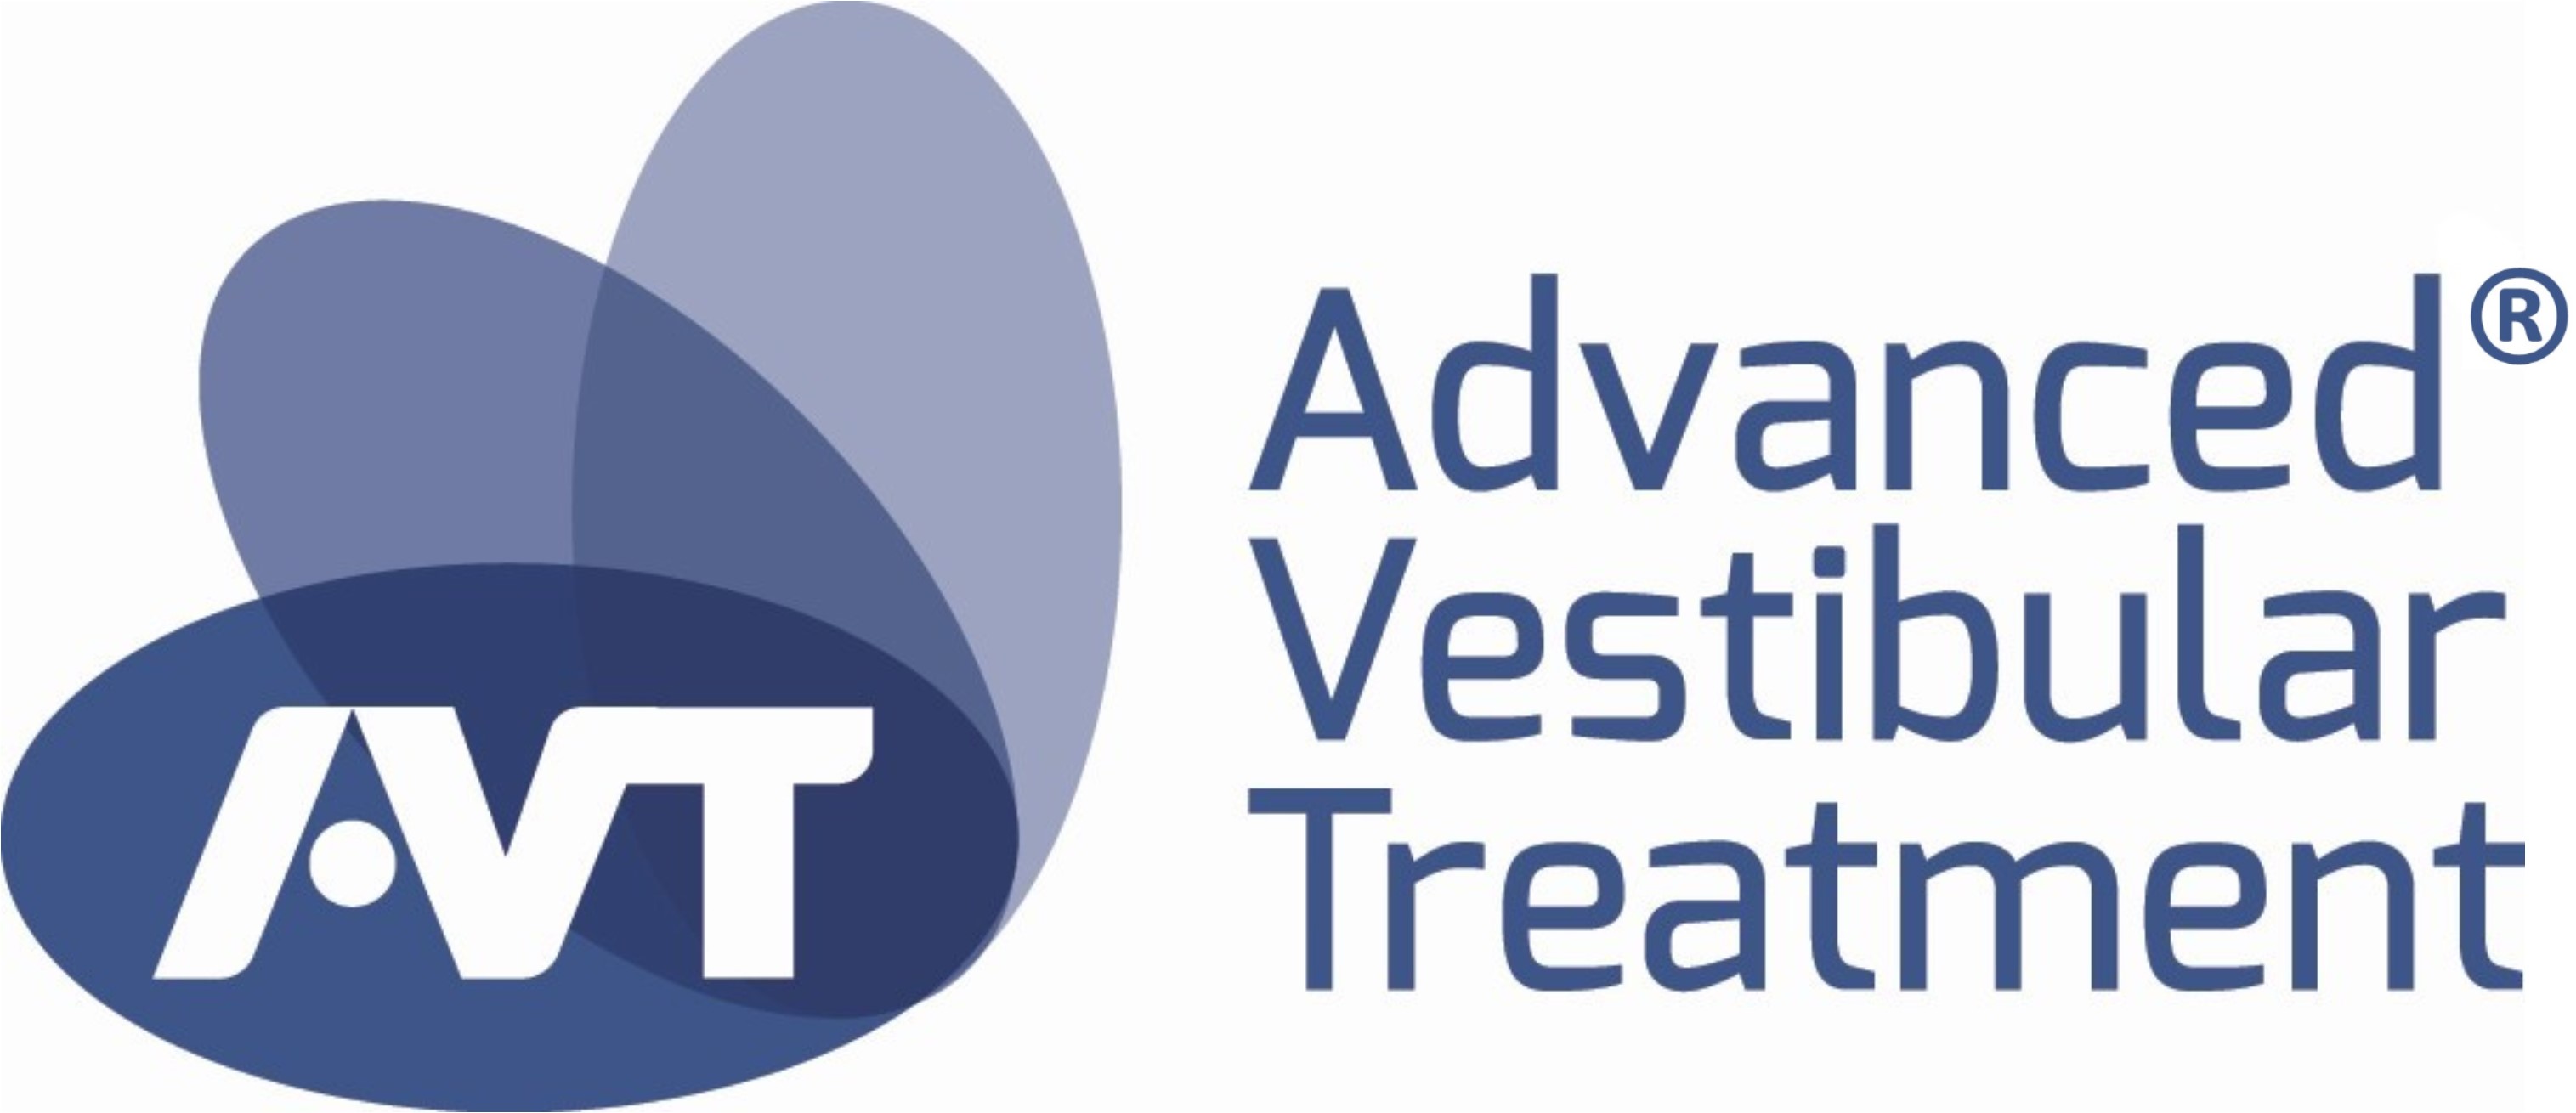 Registered trademark of Advanced Vestibular Treatment